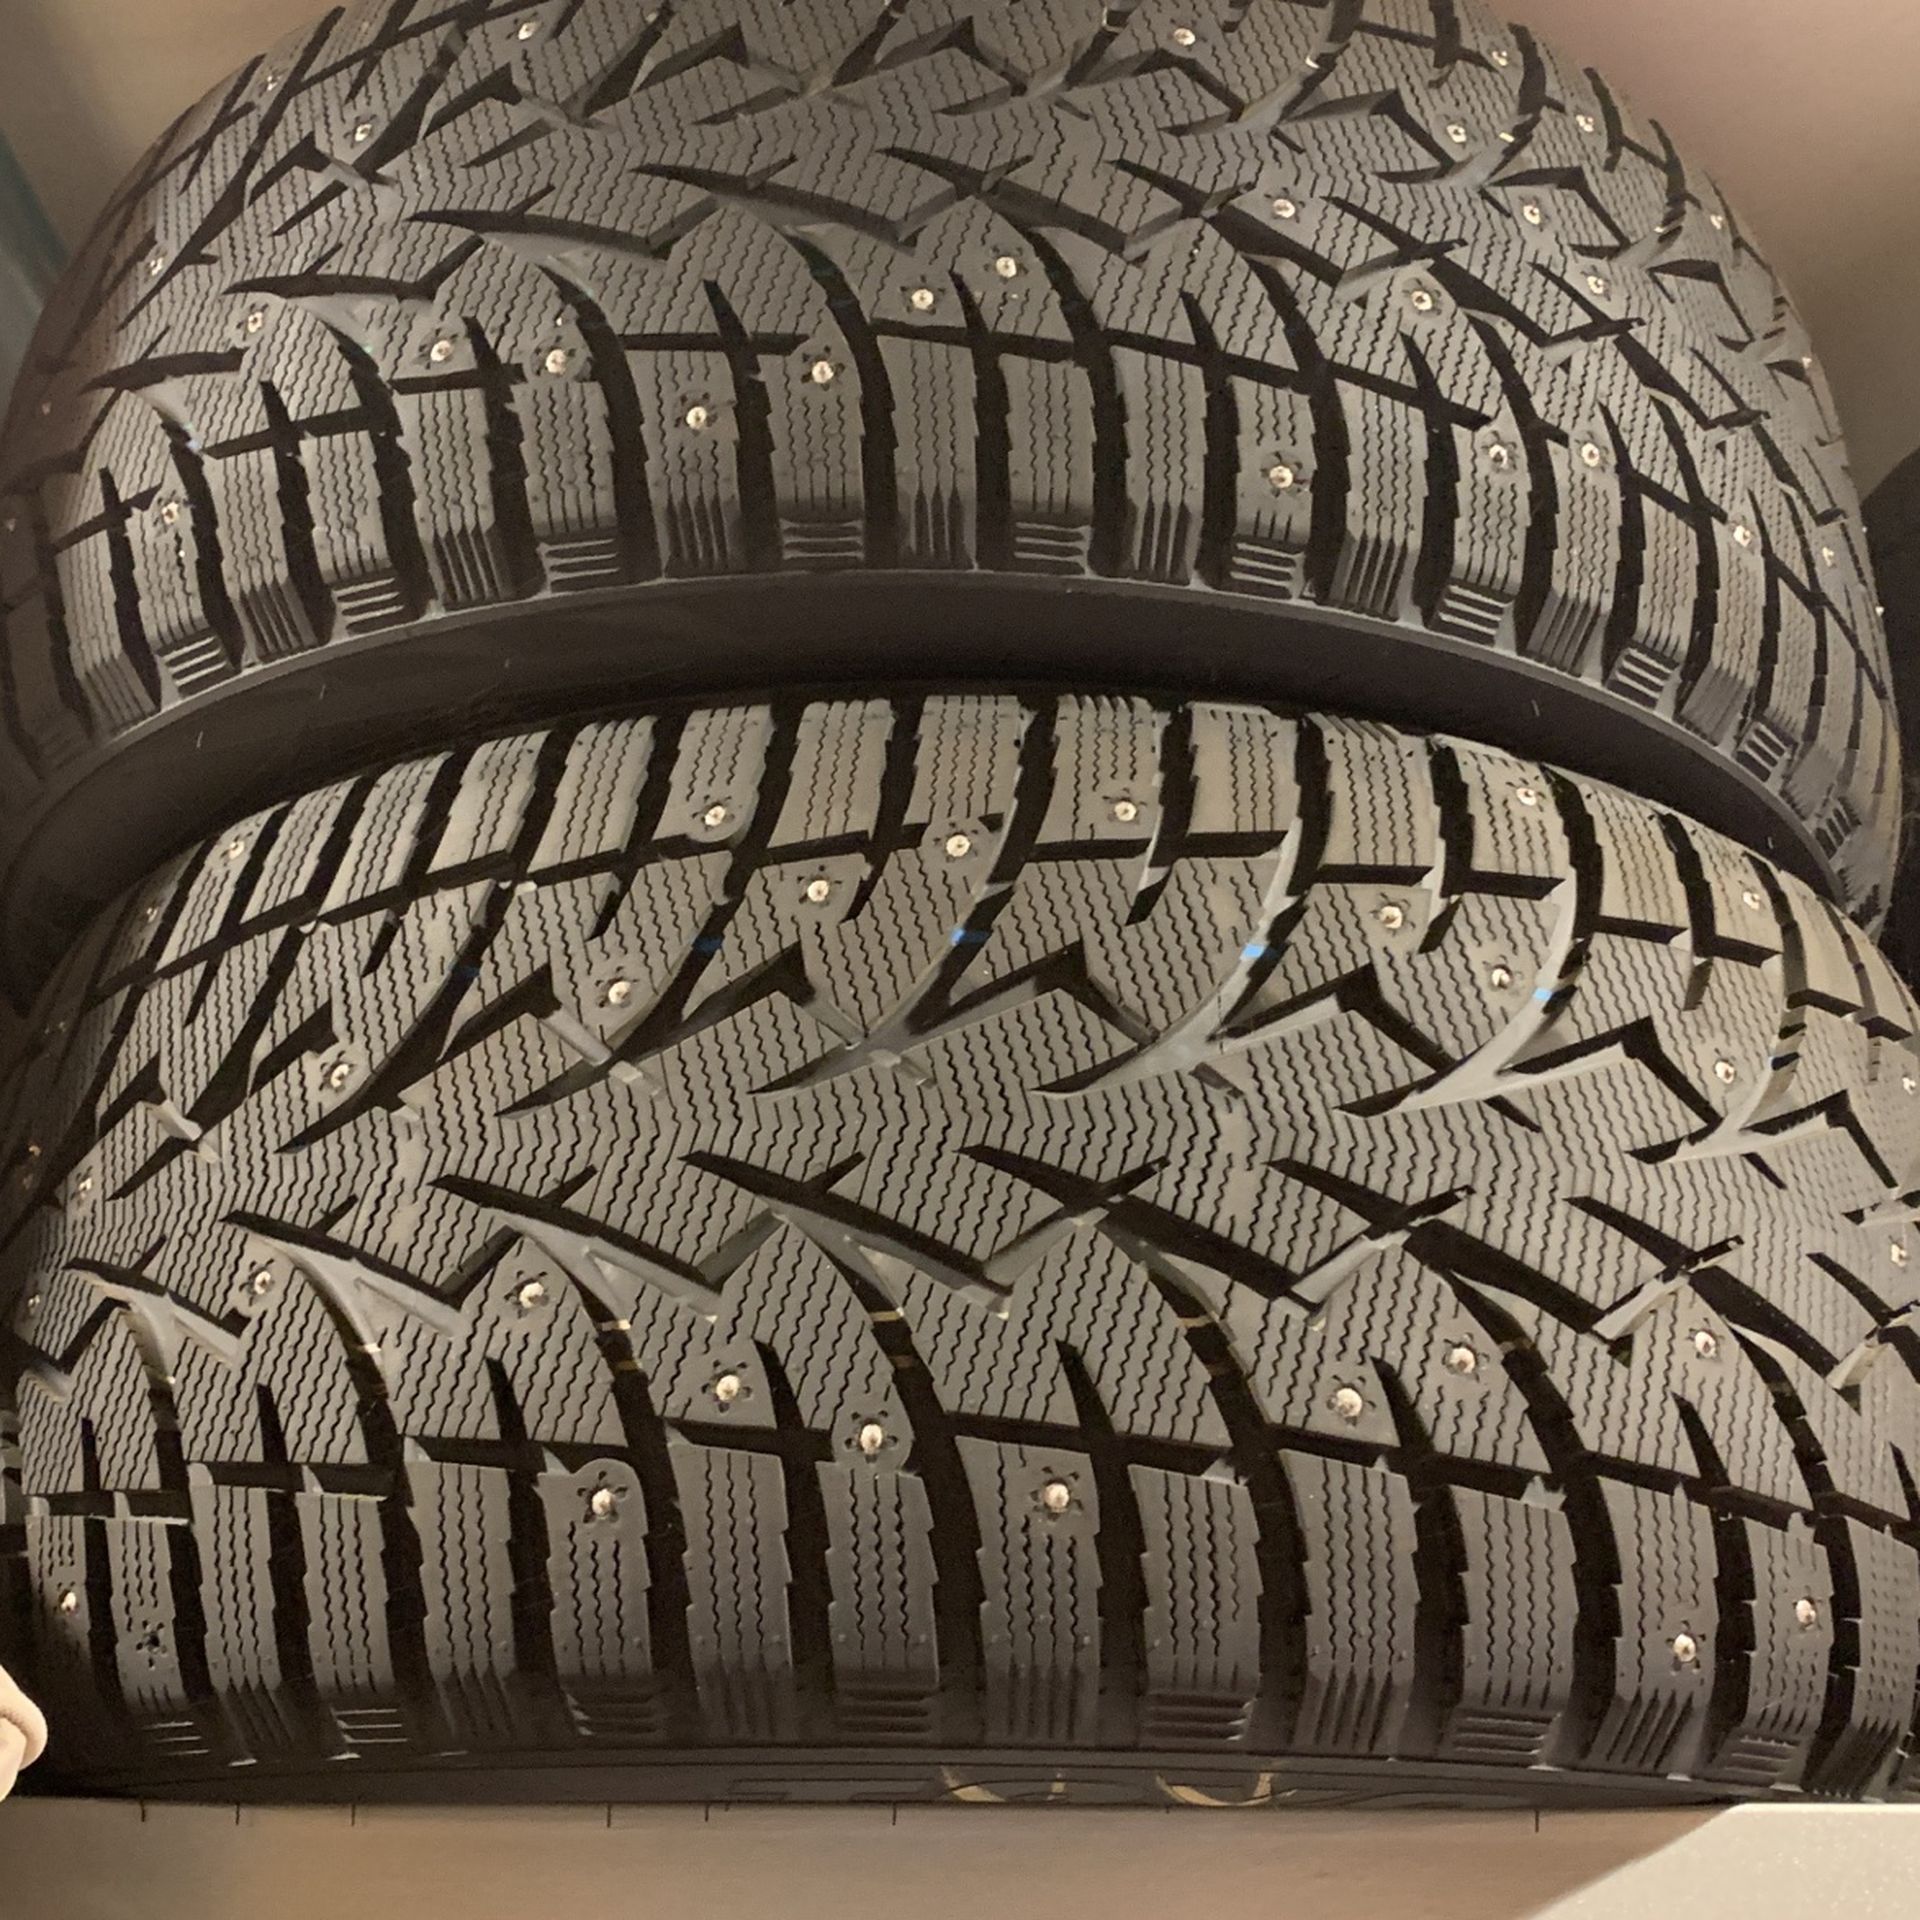 (2) 275/40/19 Studded Snow Tires